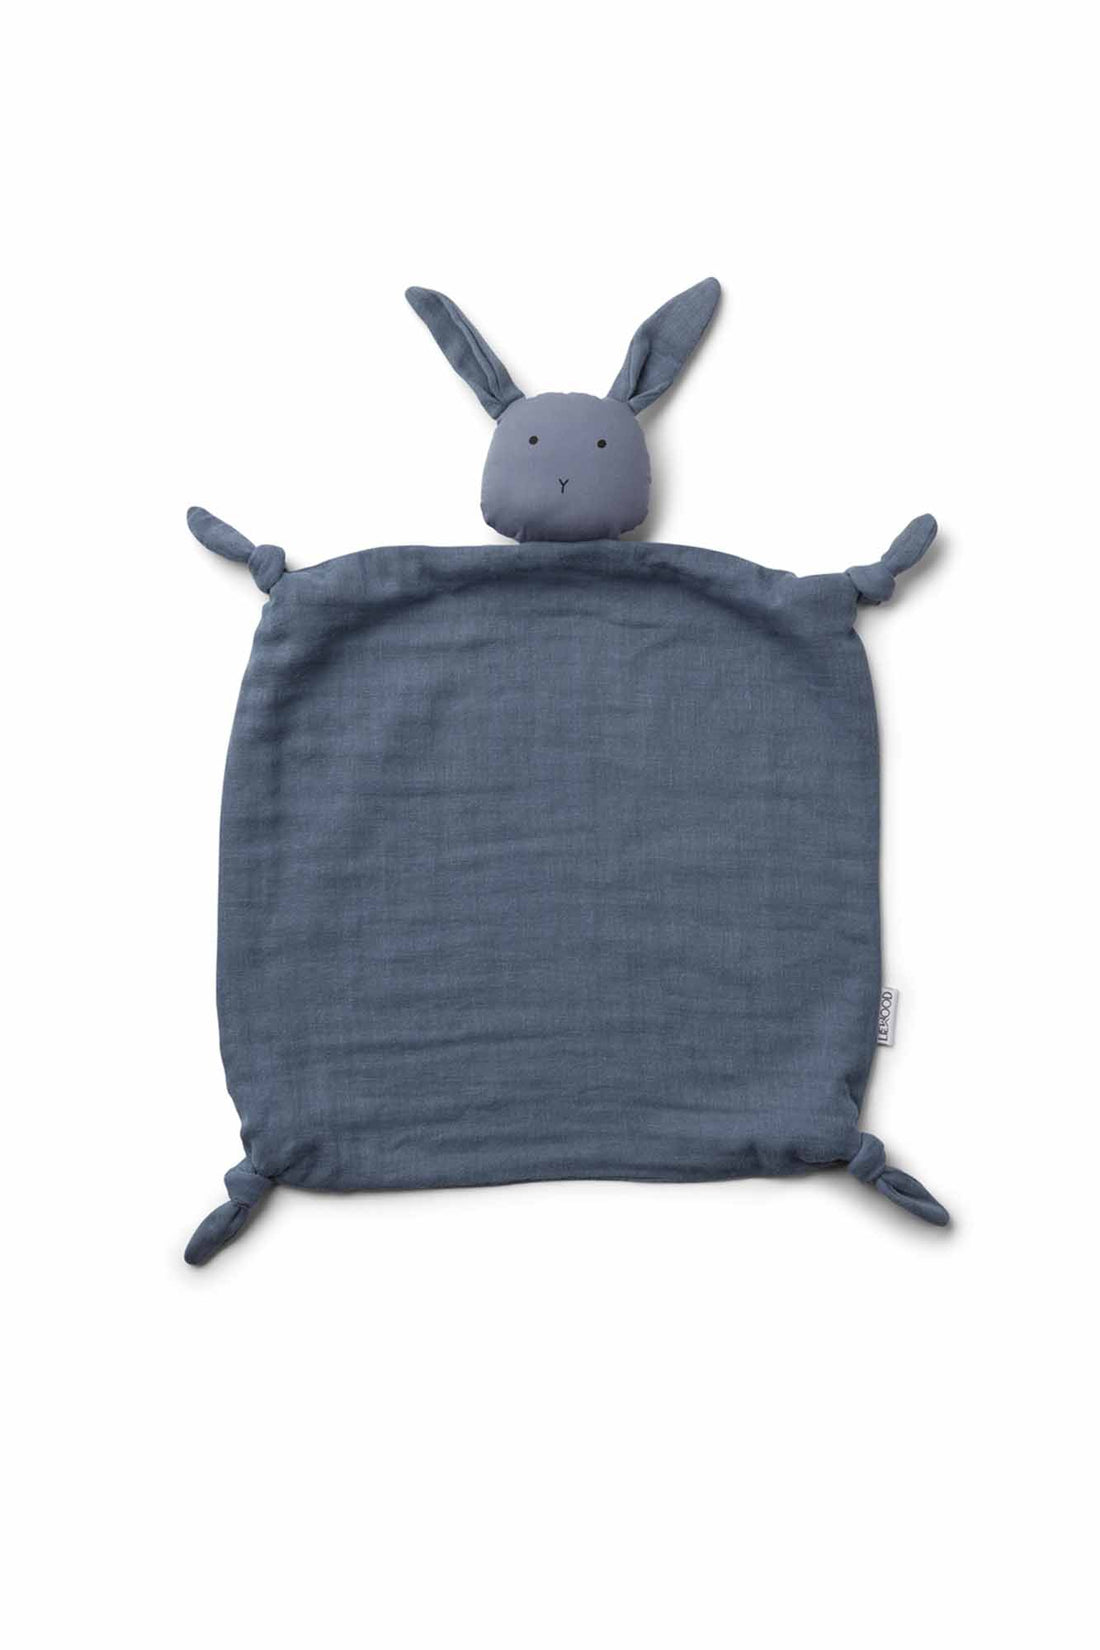 Personalisable Liewood Rabbit Blue Wave Agnete Cuddle Cloth